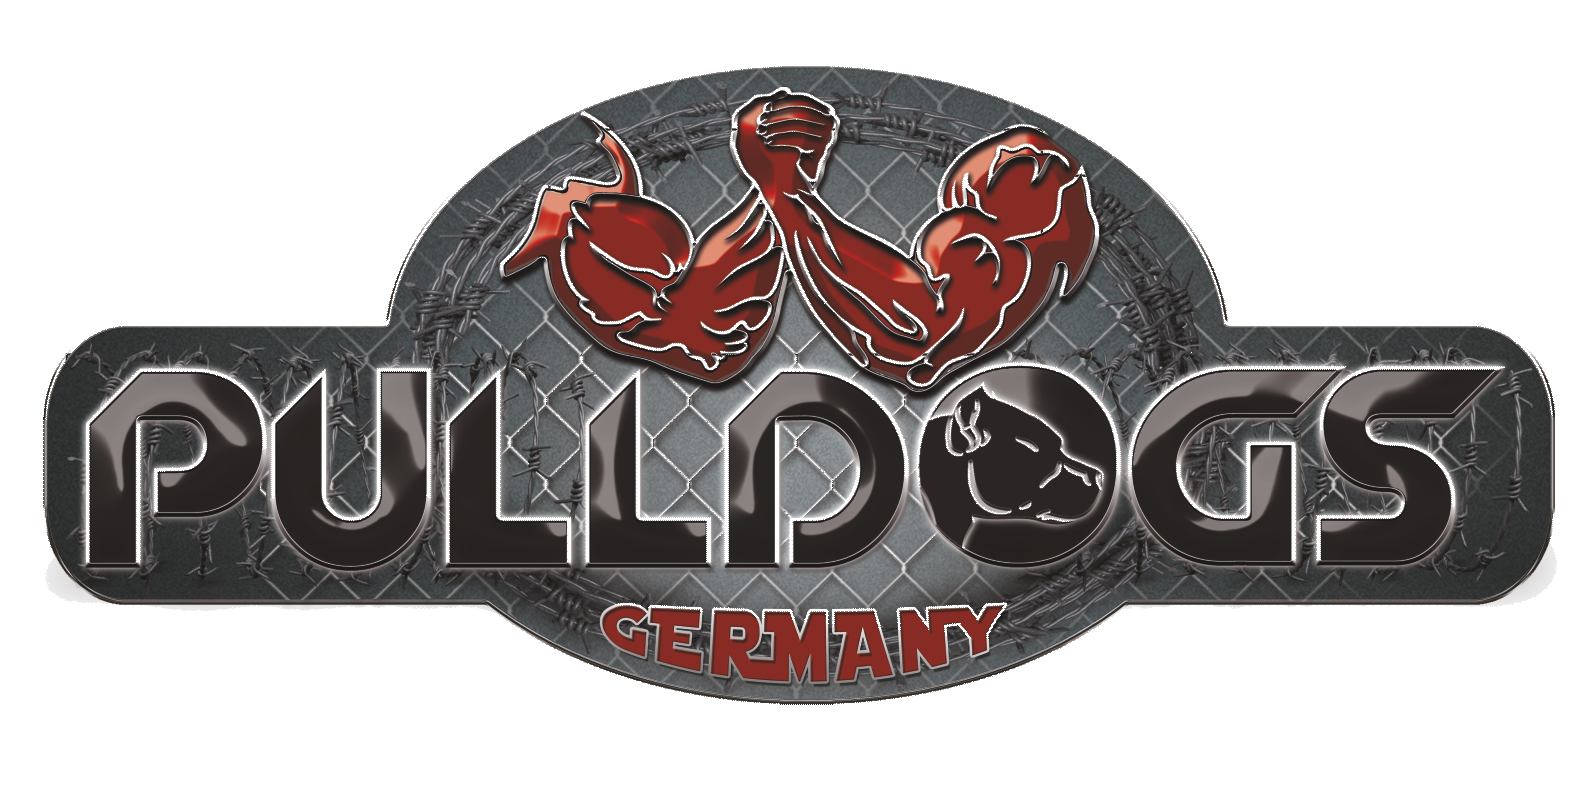 Pulldogs Logo